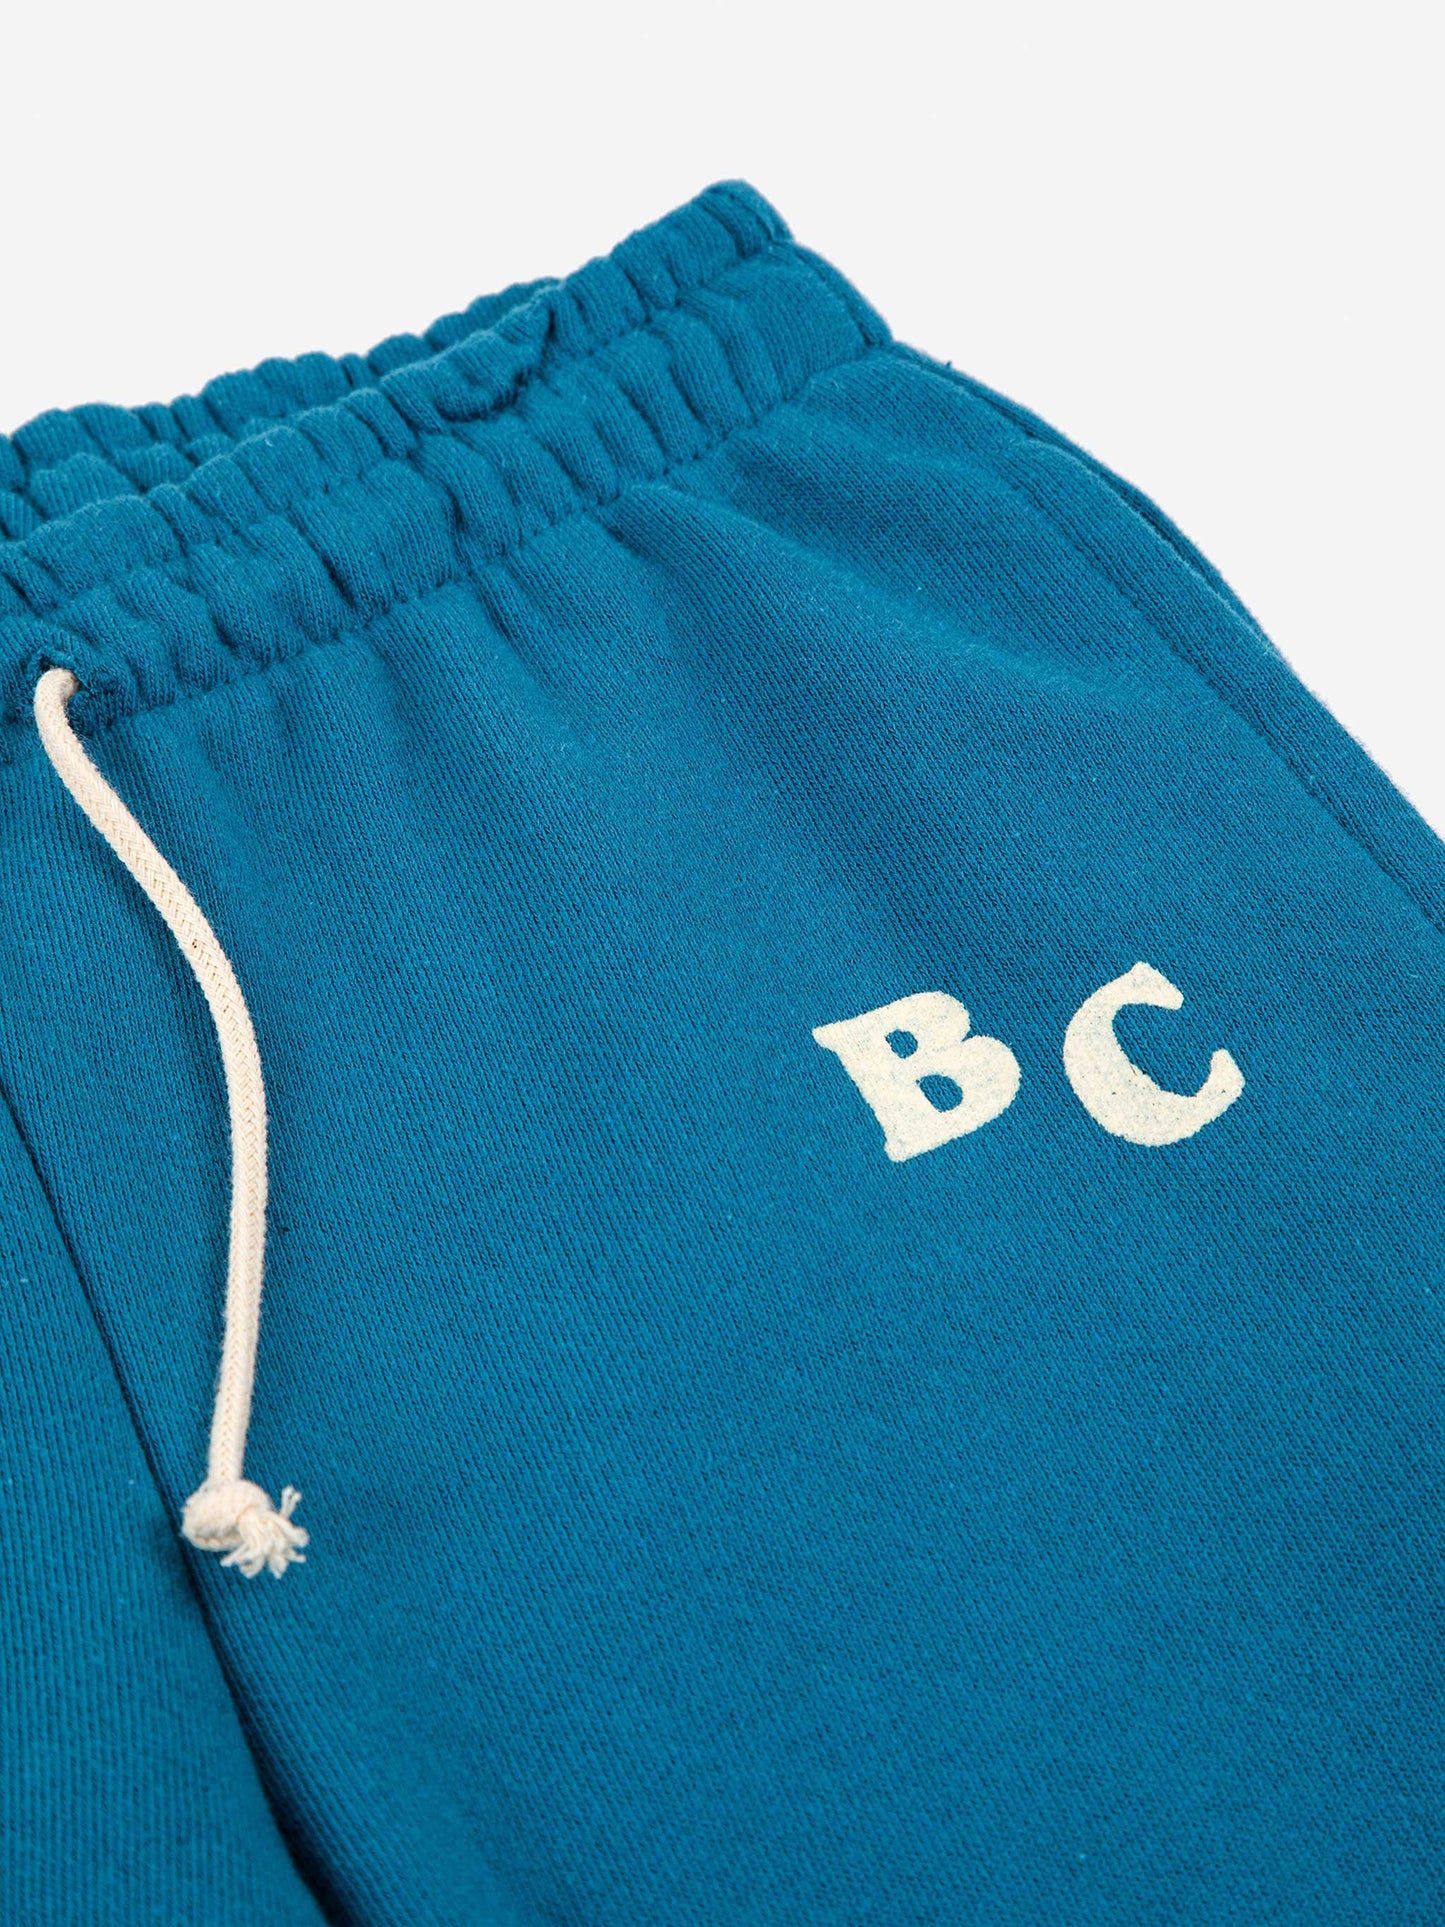 B.C jogging pants